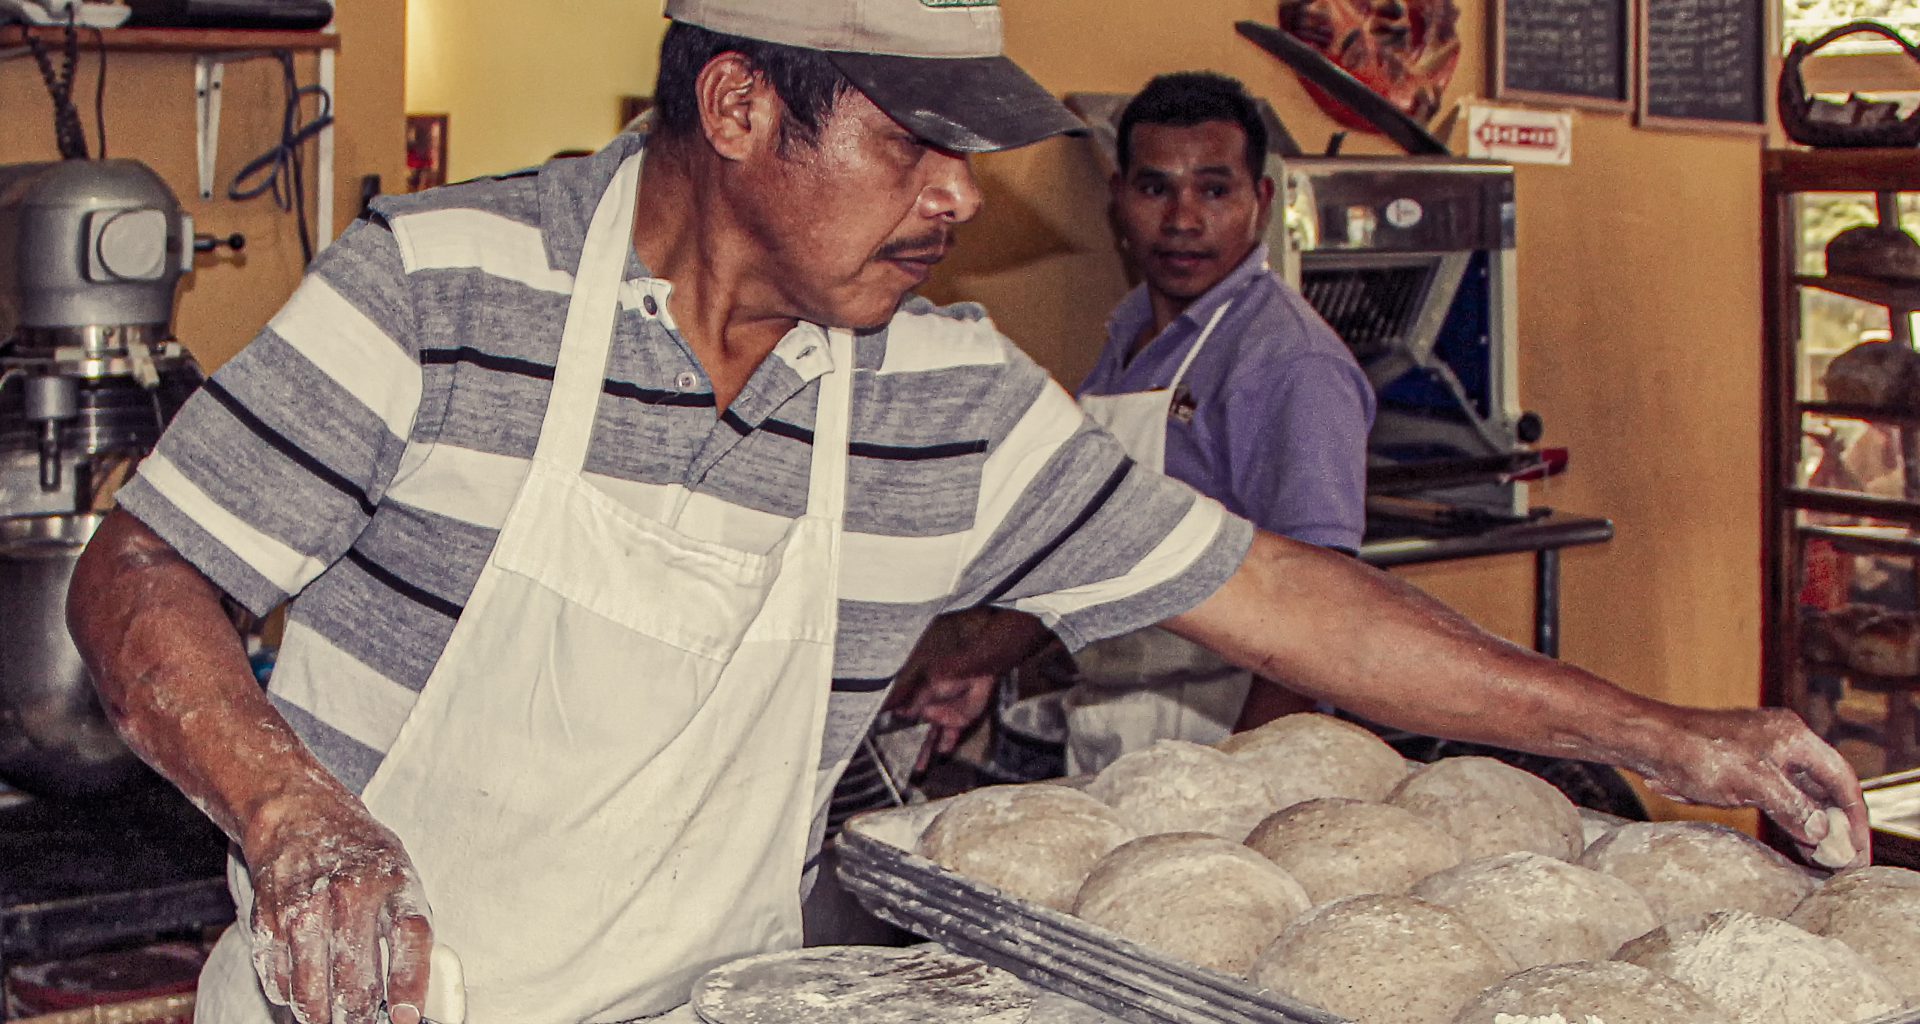 man making bread dough